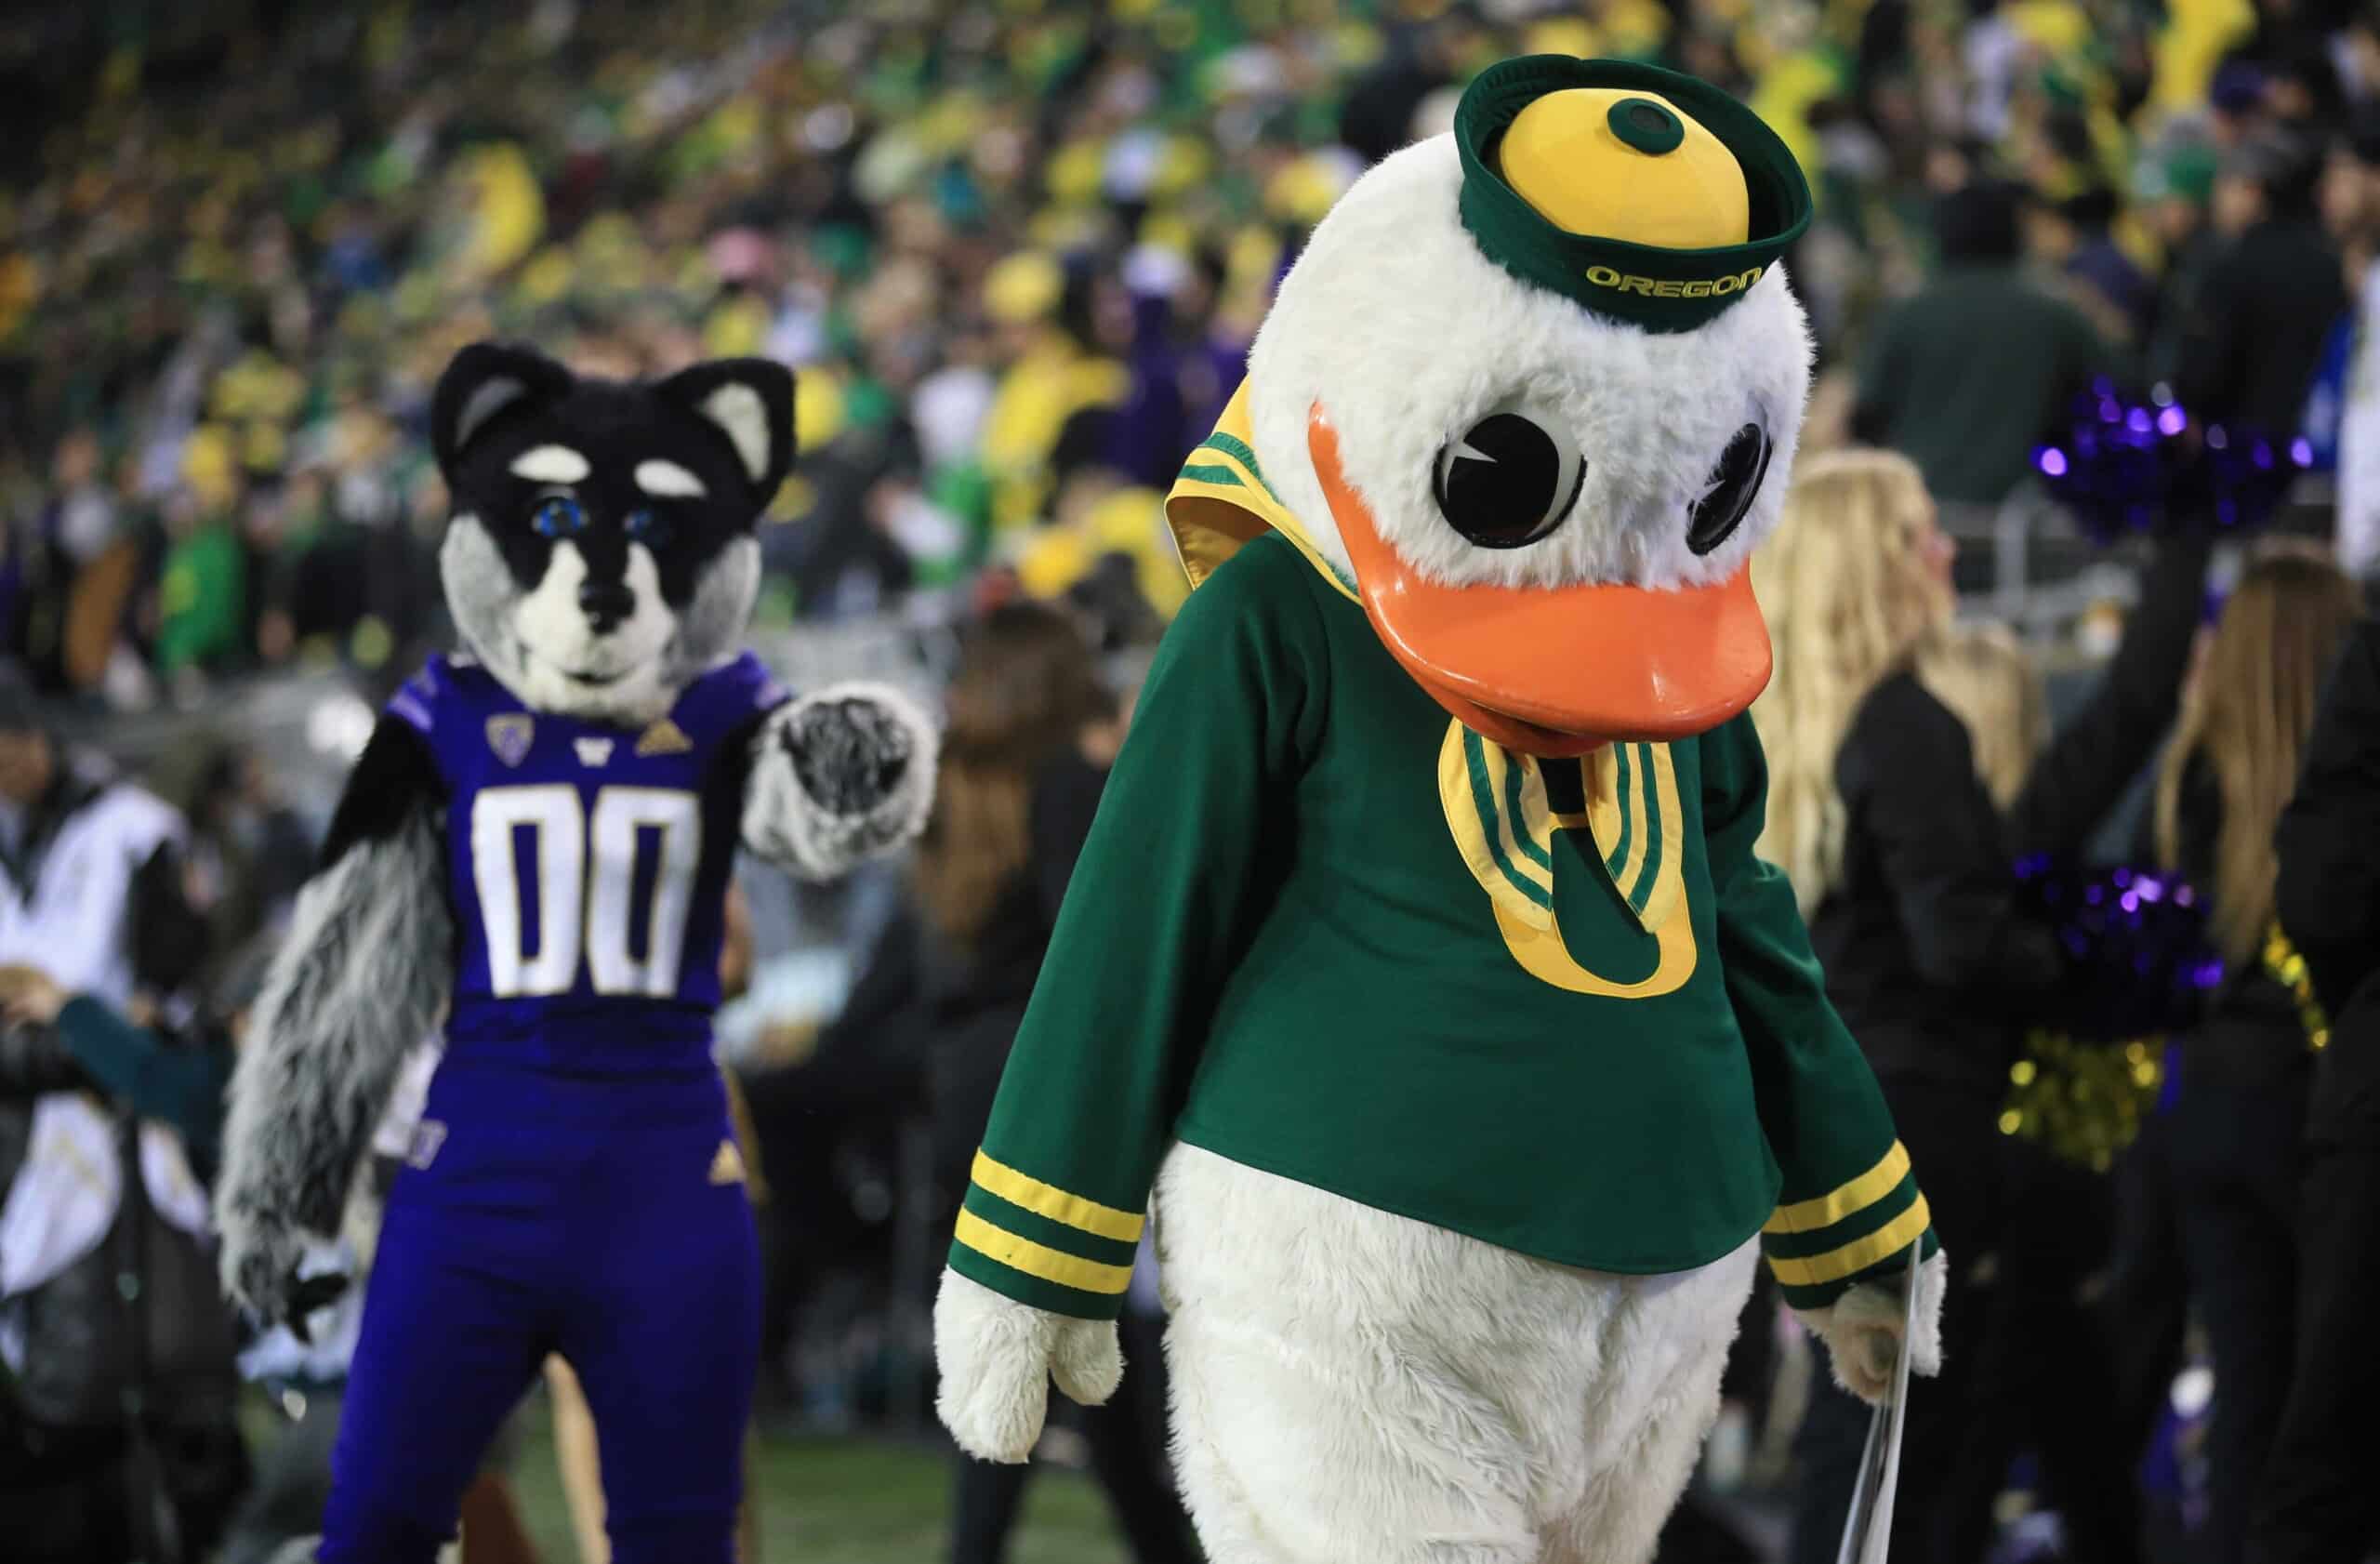 The Oregon Duck walks away from the Washington Husky mascot during the game Saturday, Nov. 12, 2022, at Autzen Stadium in Eugene, Ore.